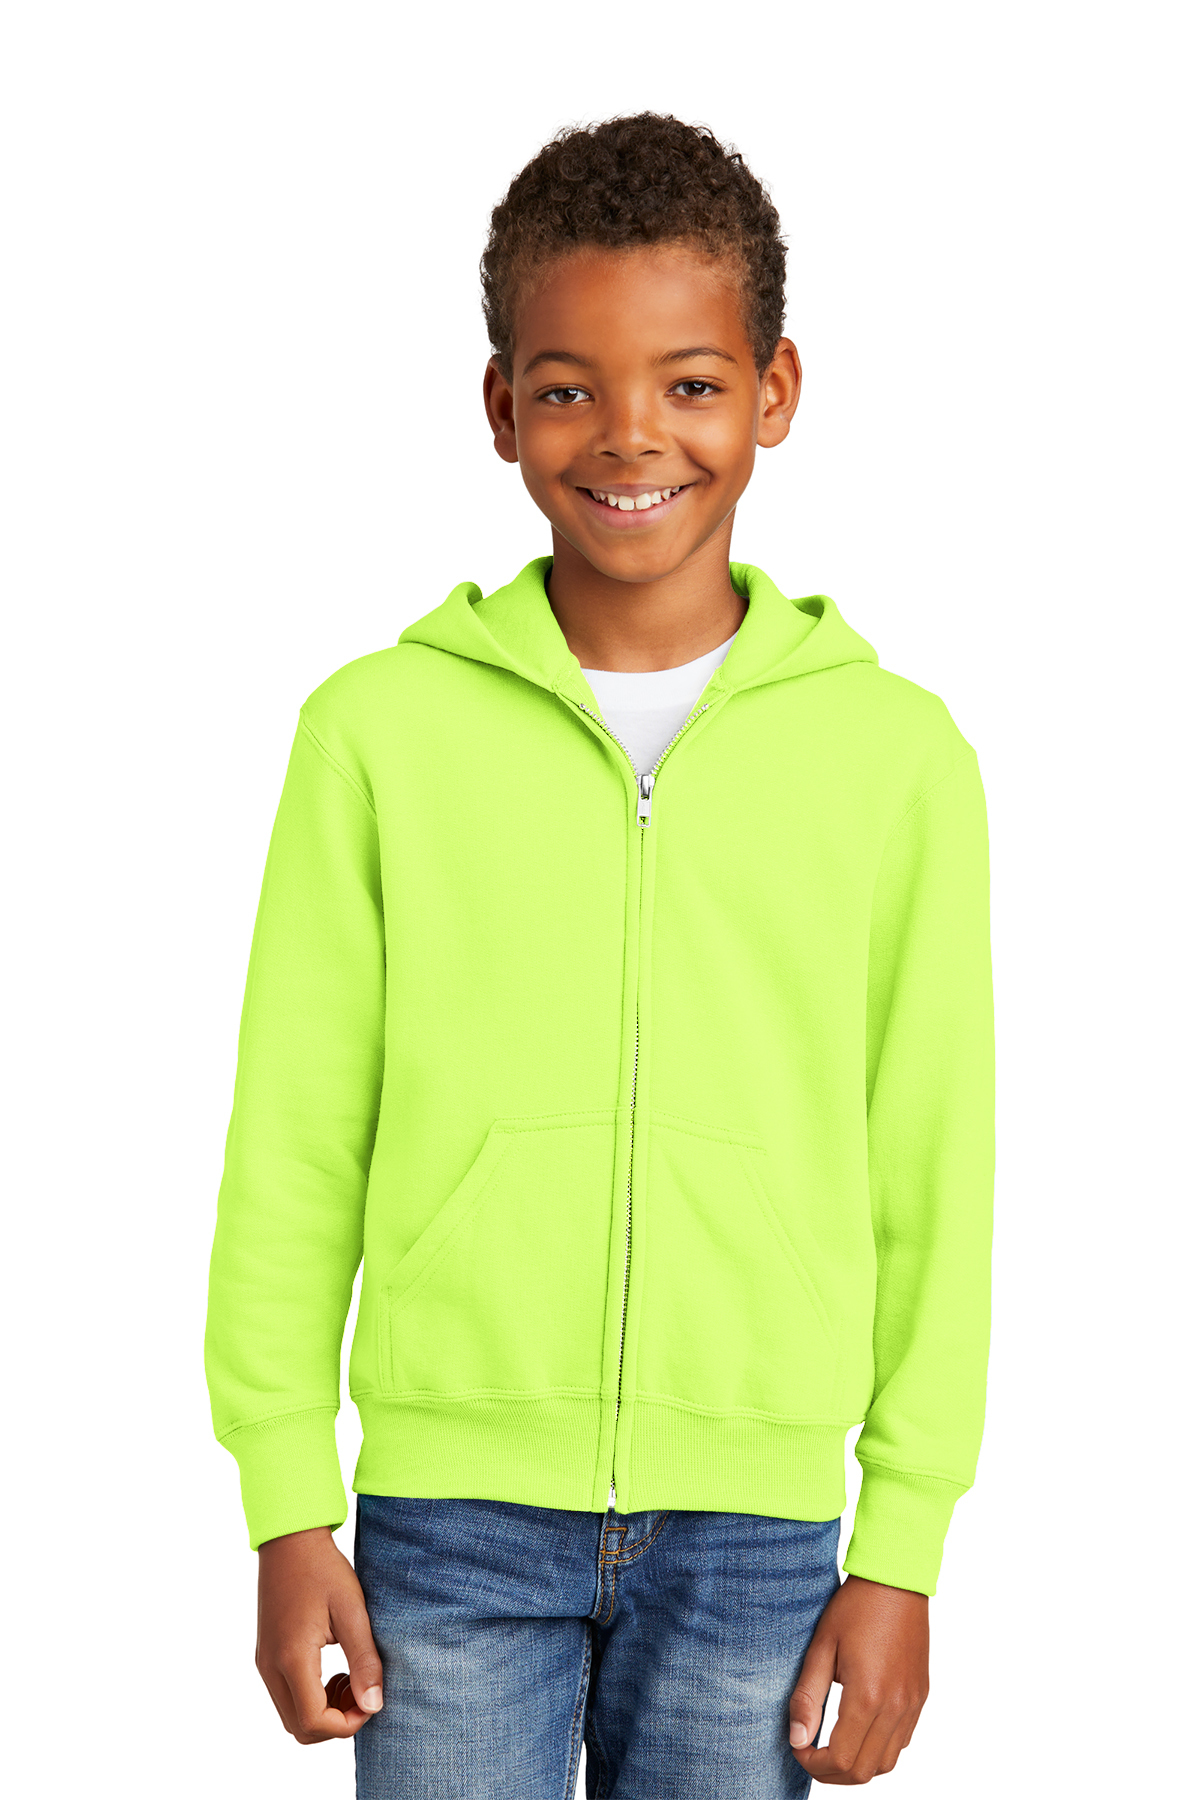 Port & Company Essential Fleece Full-Zip Hooded Sweatshirt, Product